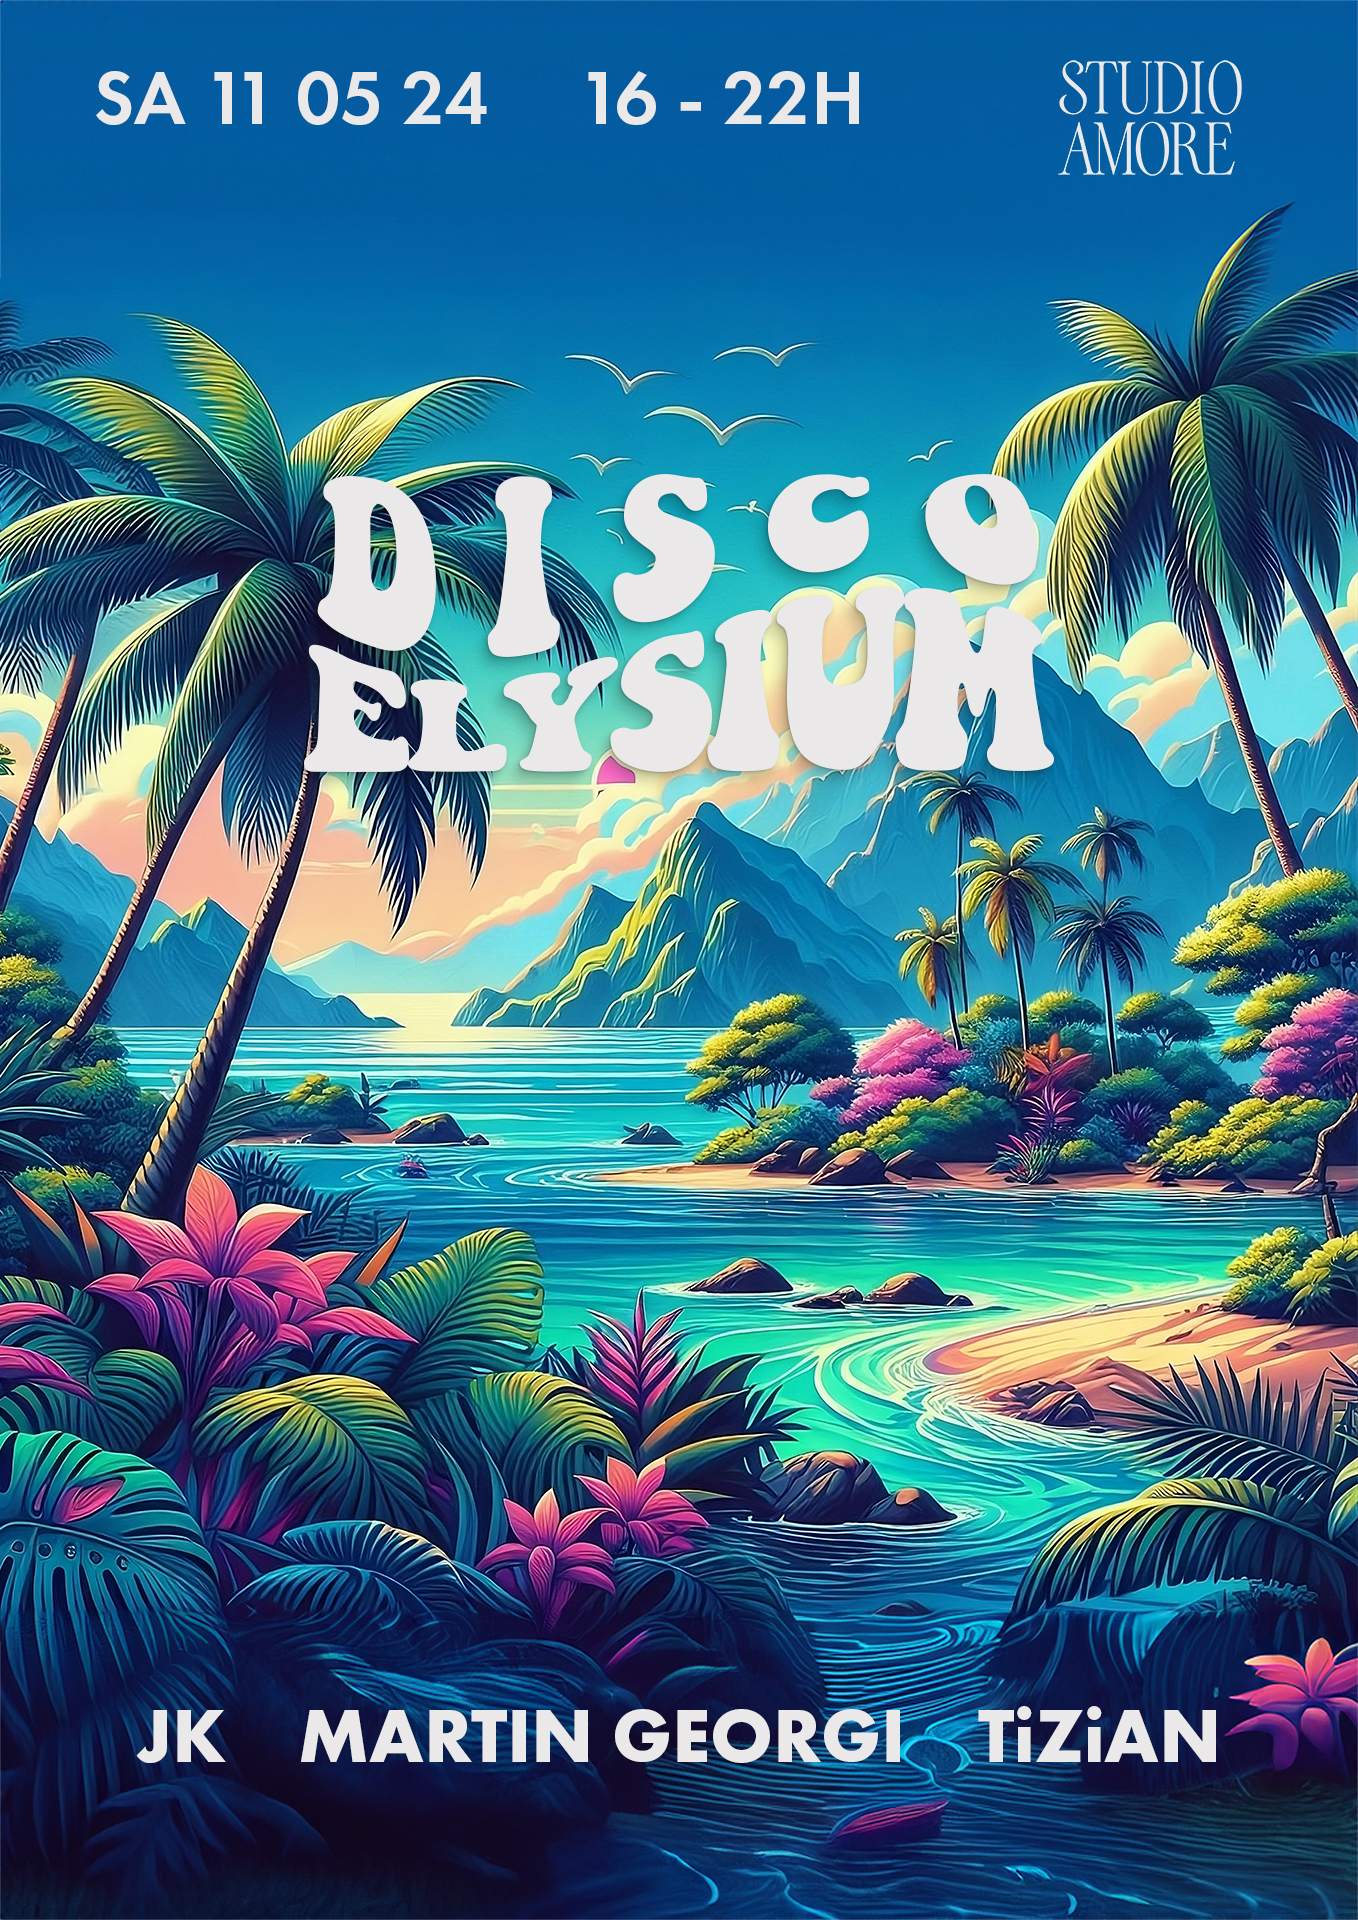 DISCO ELYSIUM - Flyer front